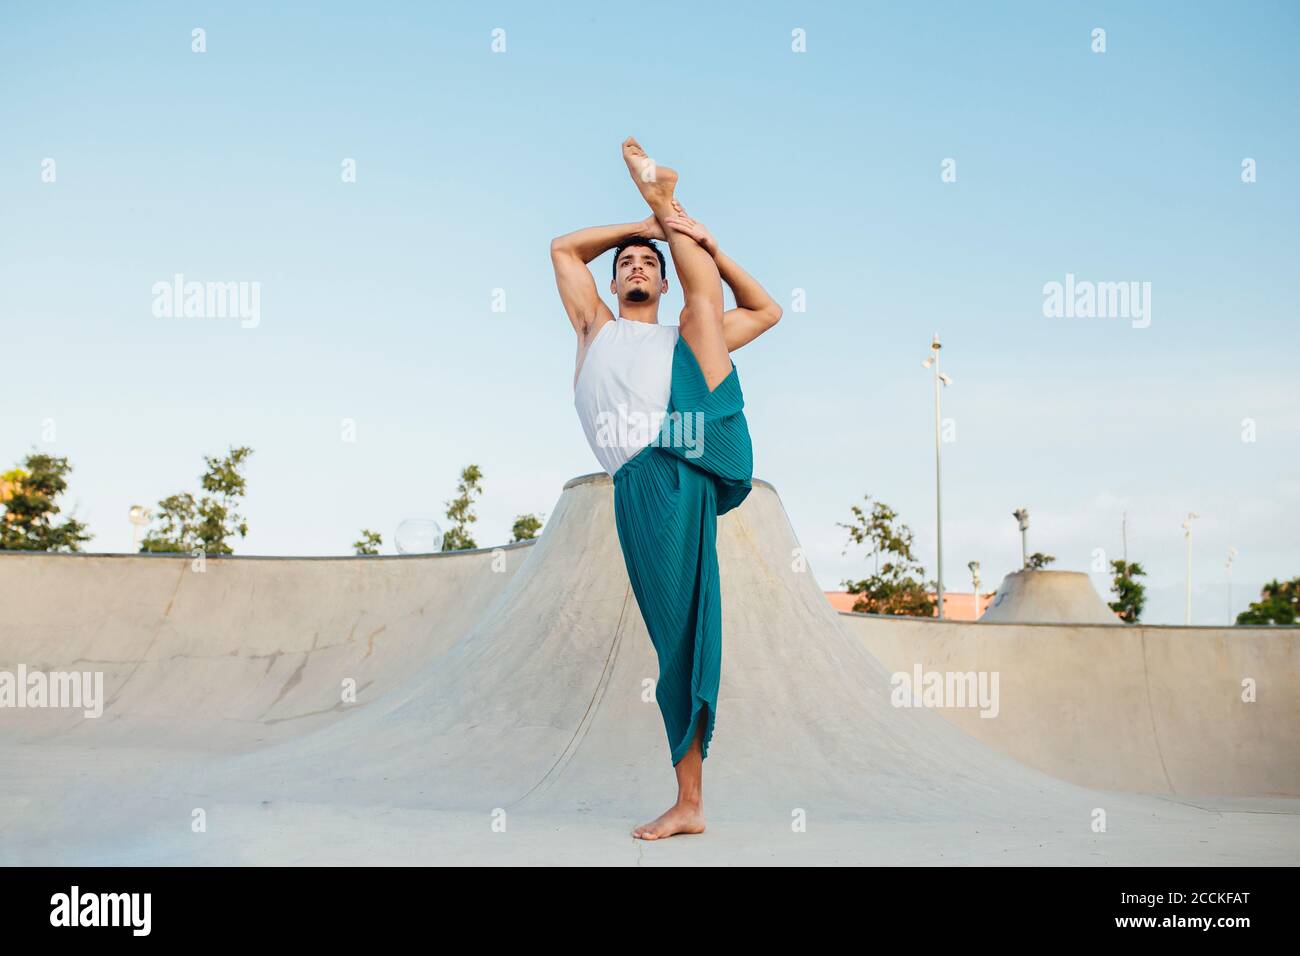 Confident man splitting leg while practicing rhythmic gymnastics against clear sky Stock Photo